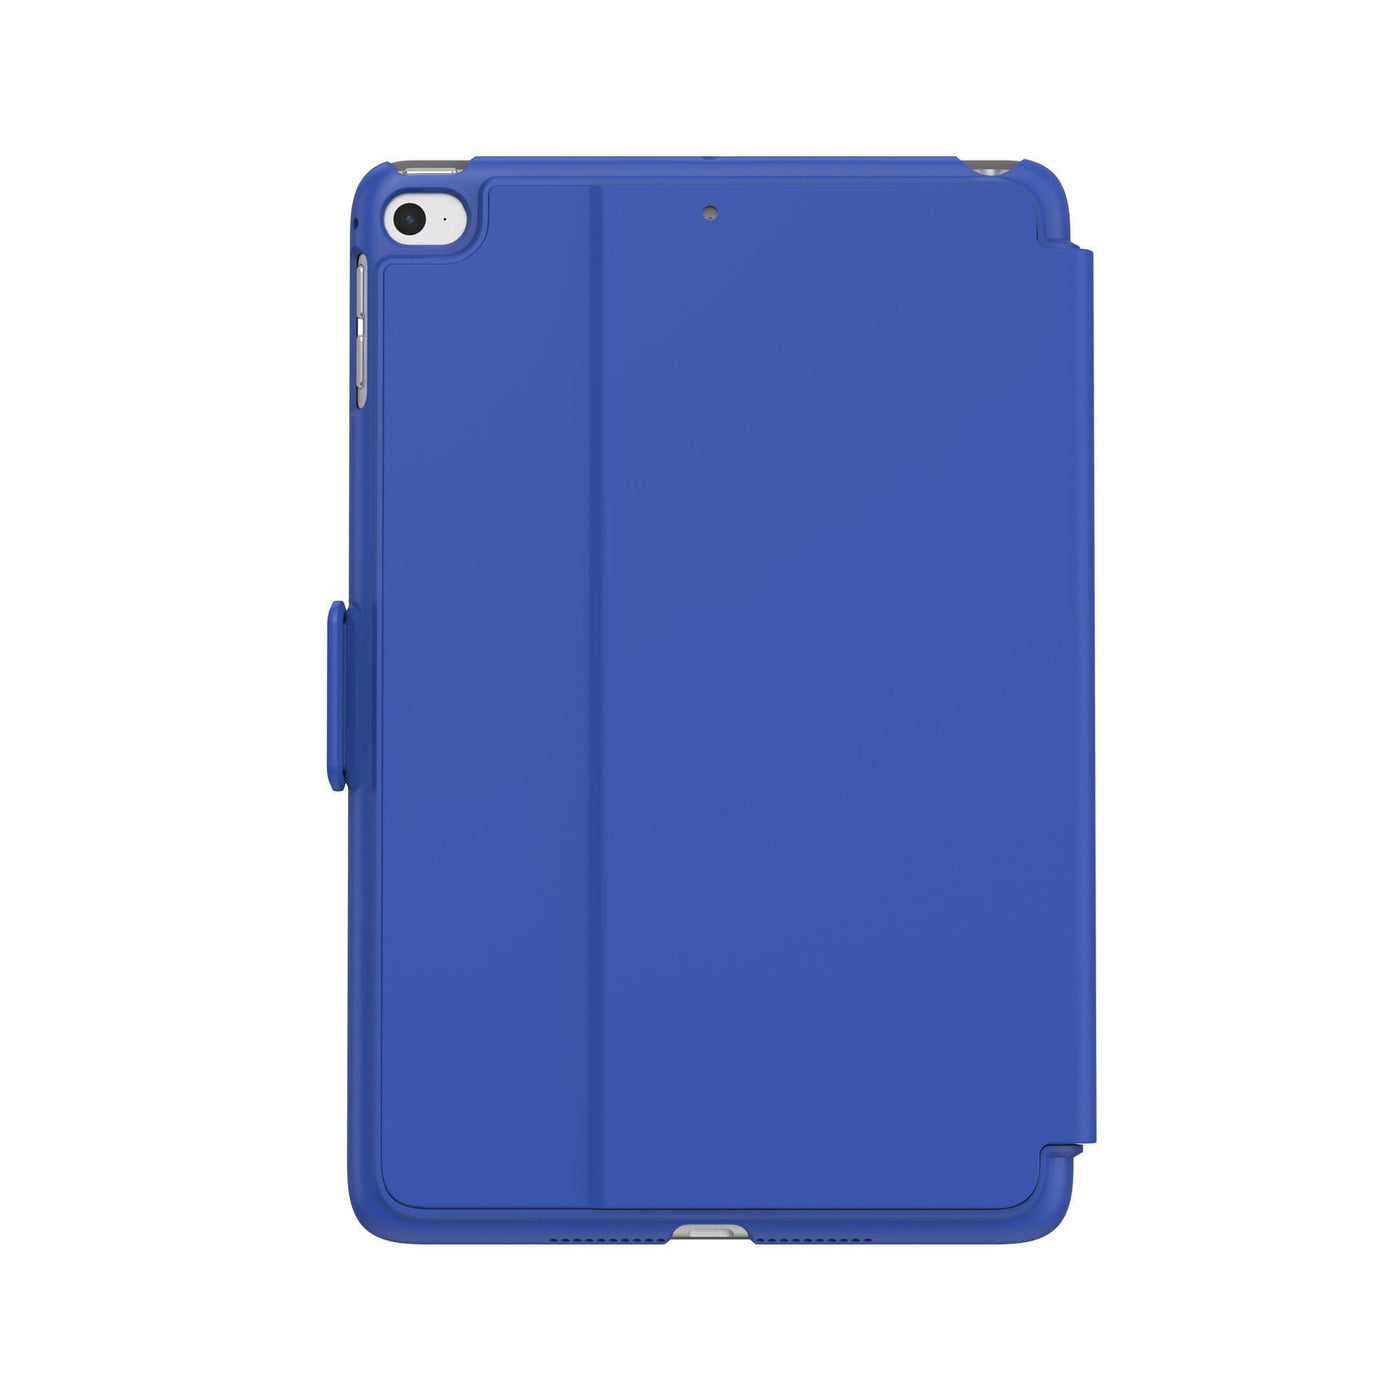 Casense Folio Case for iPad Mini 5